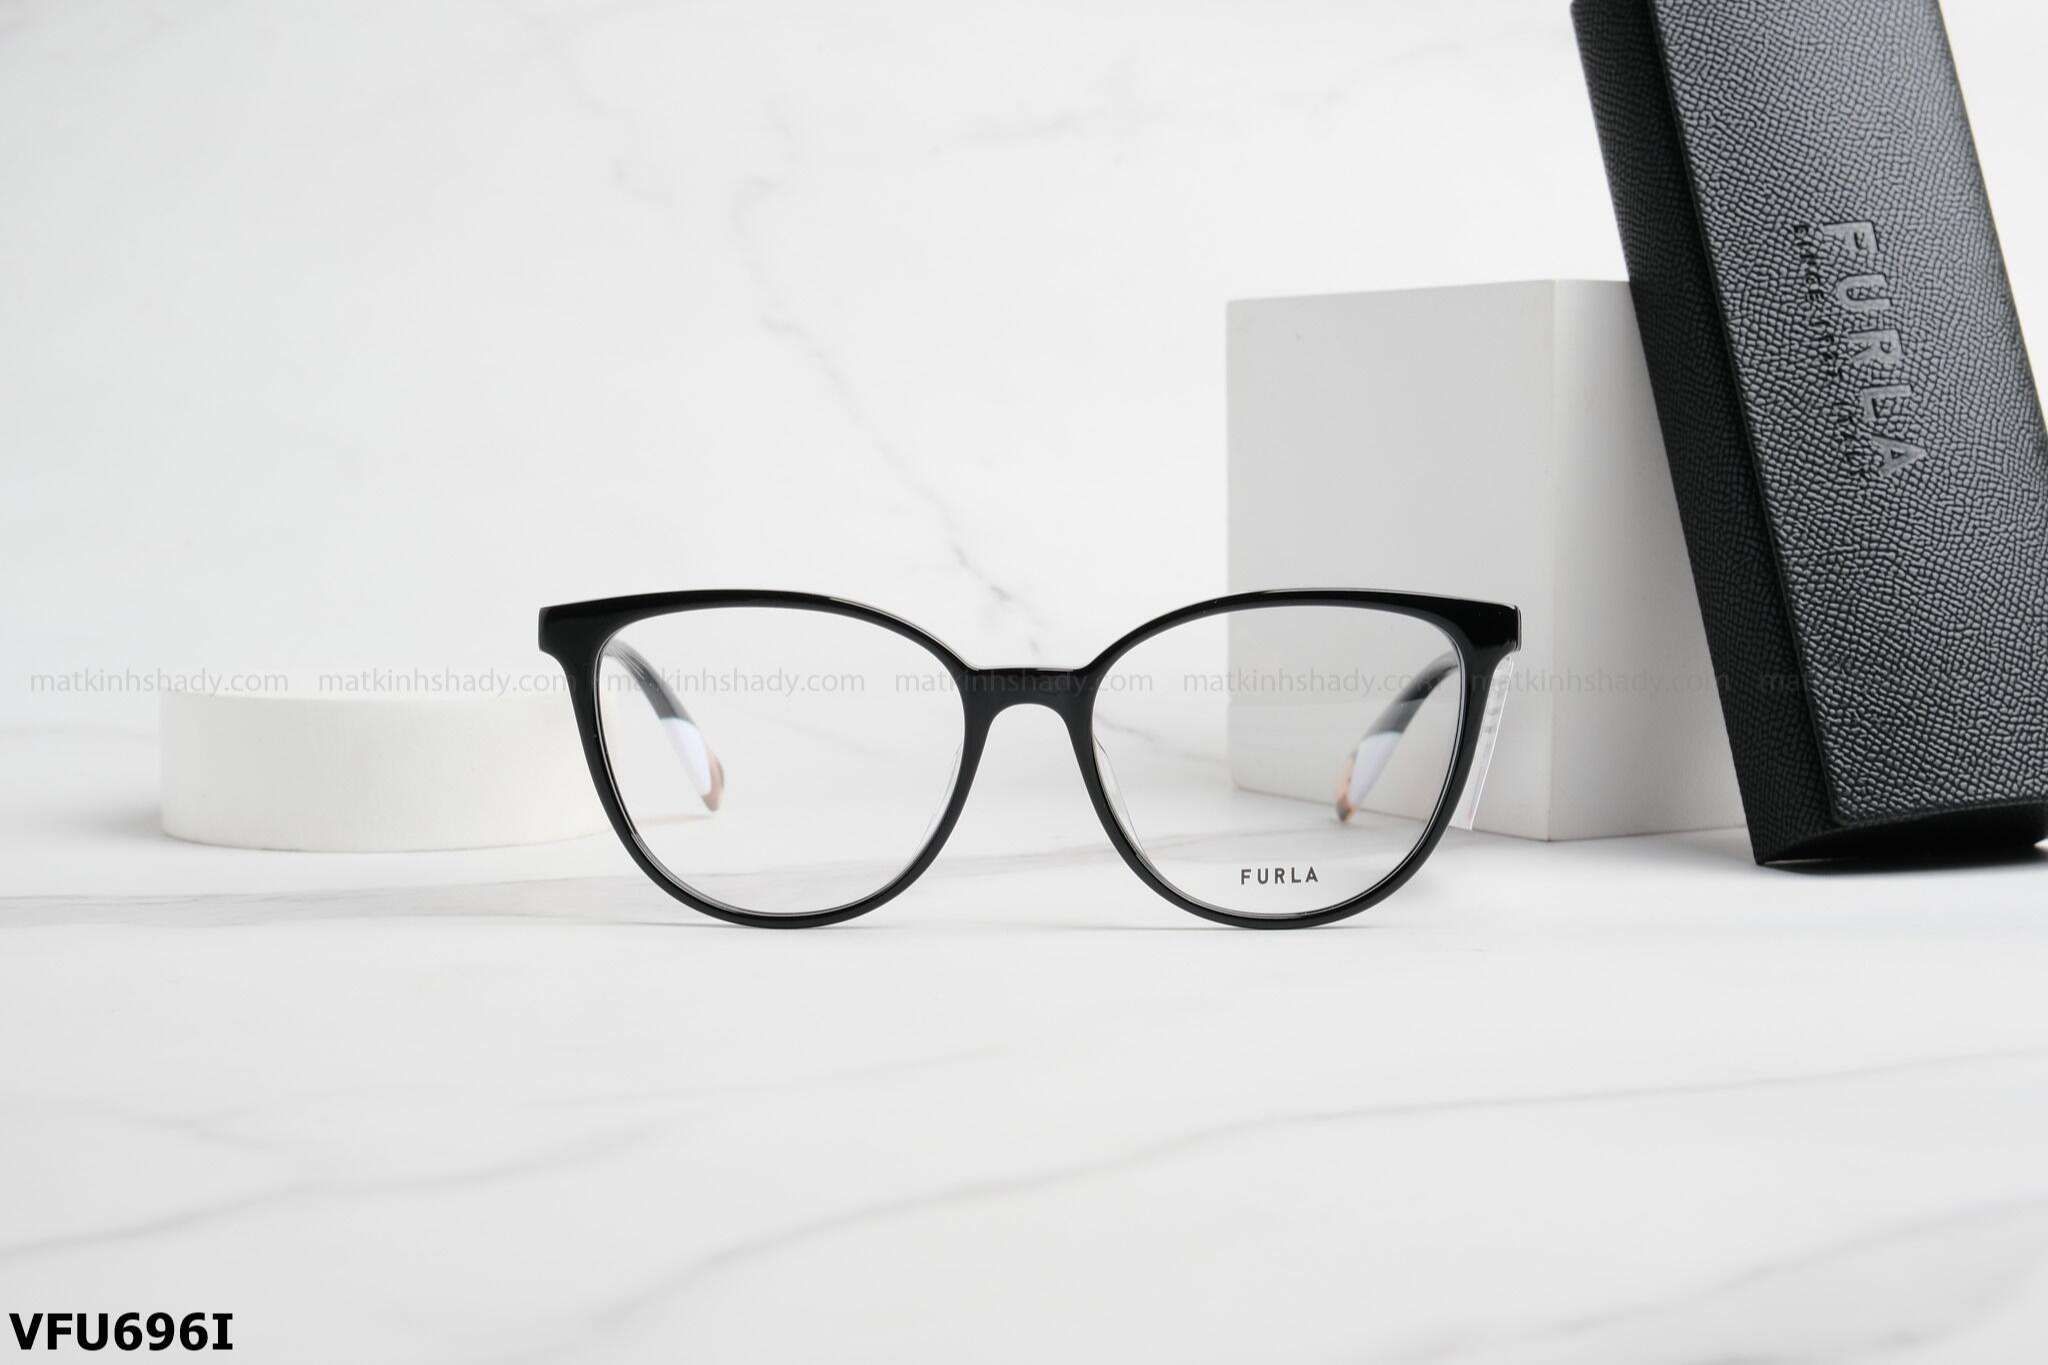  Furla Eyewear - Glasses - VFU696I 